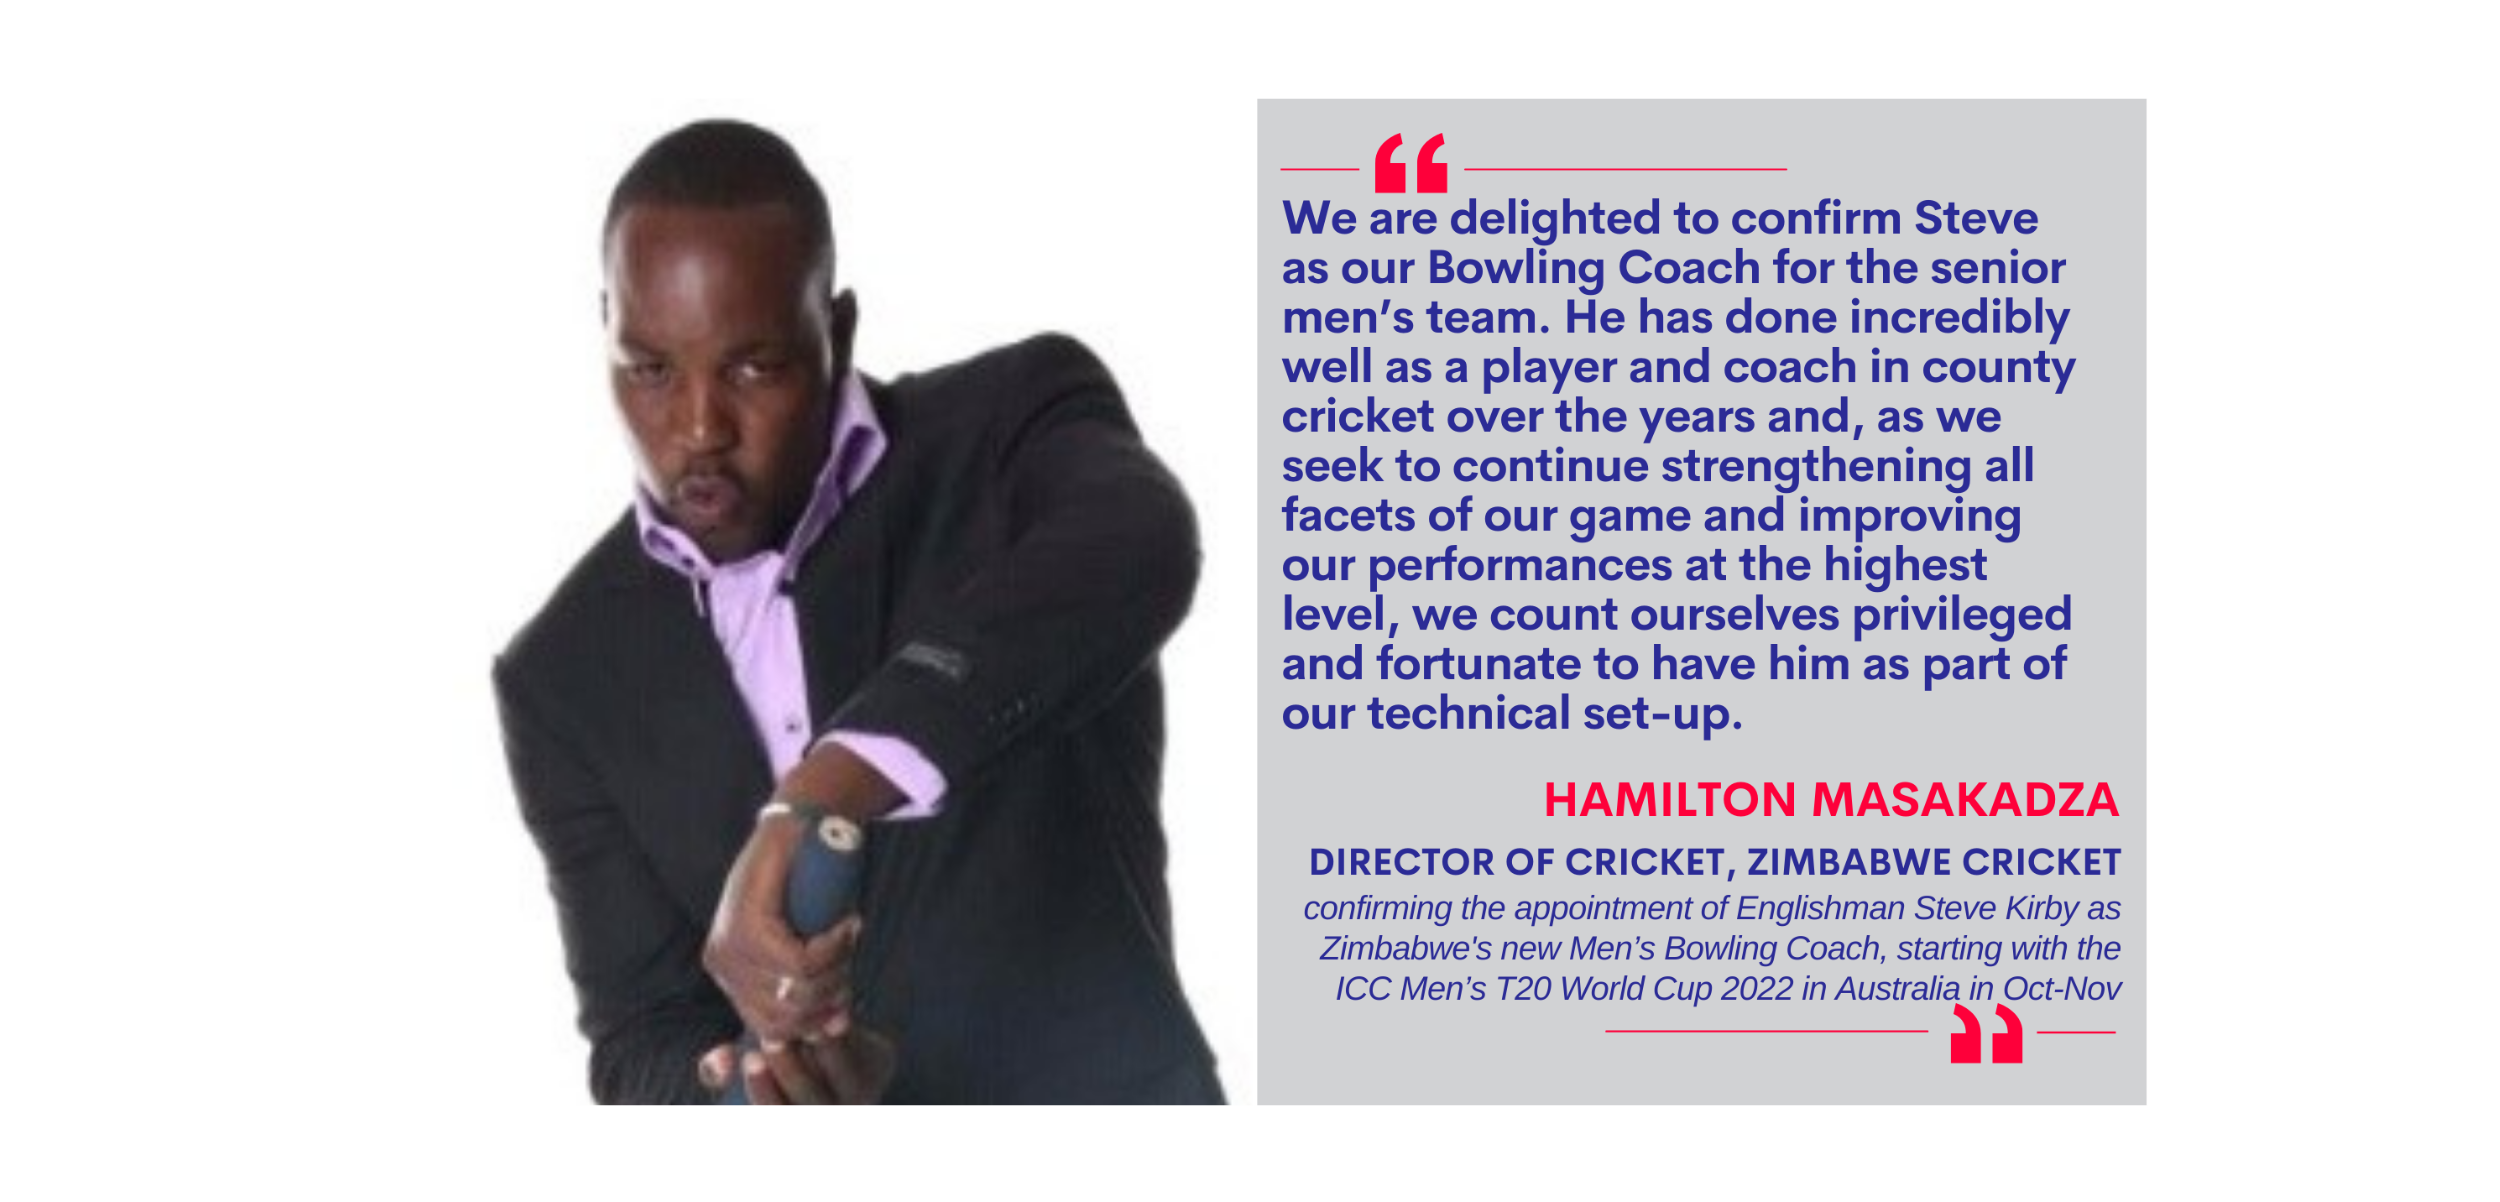 Hamilton Masakadza, Director of Cricket, Zimbabwe Cricket on September 23, 2022